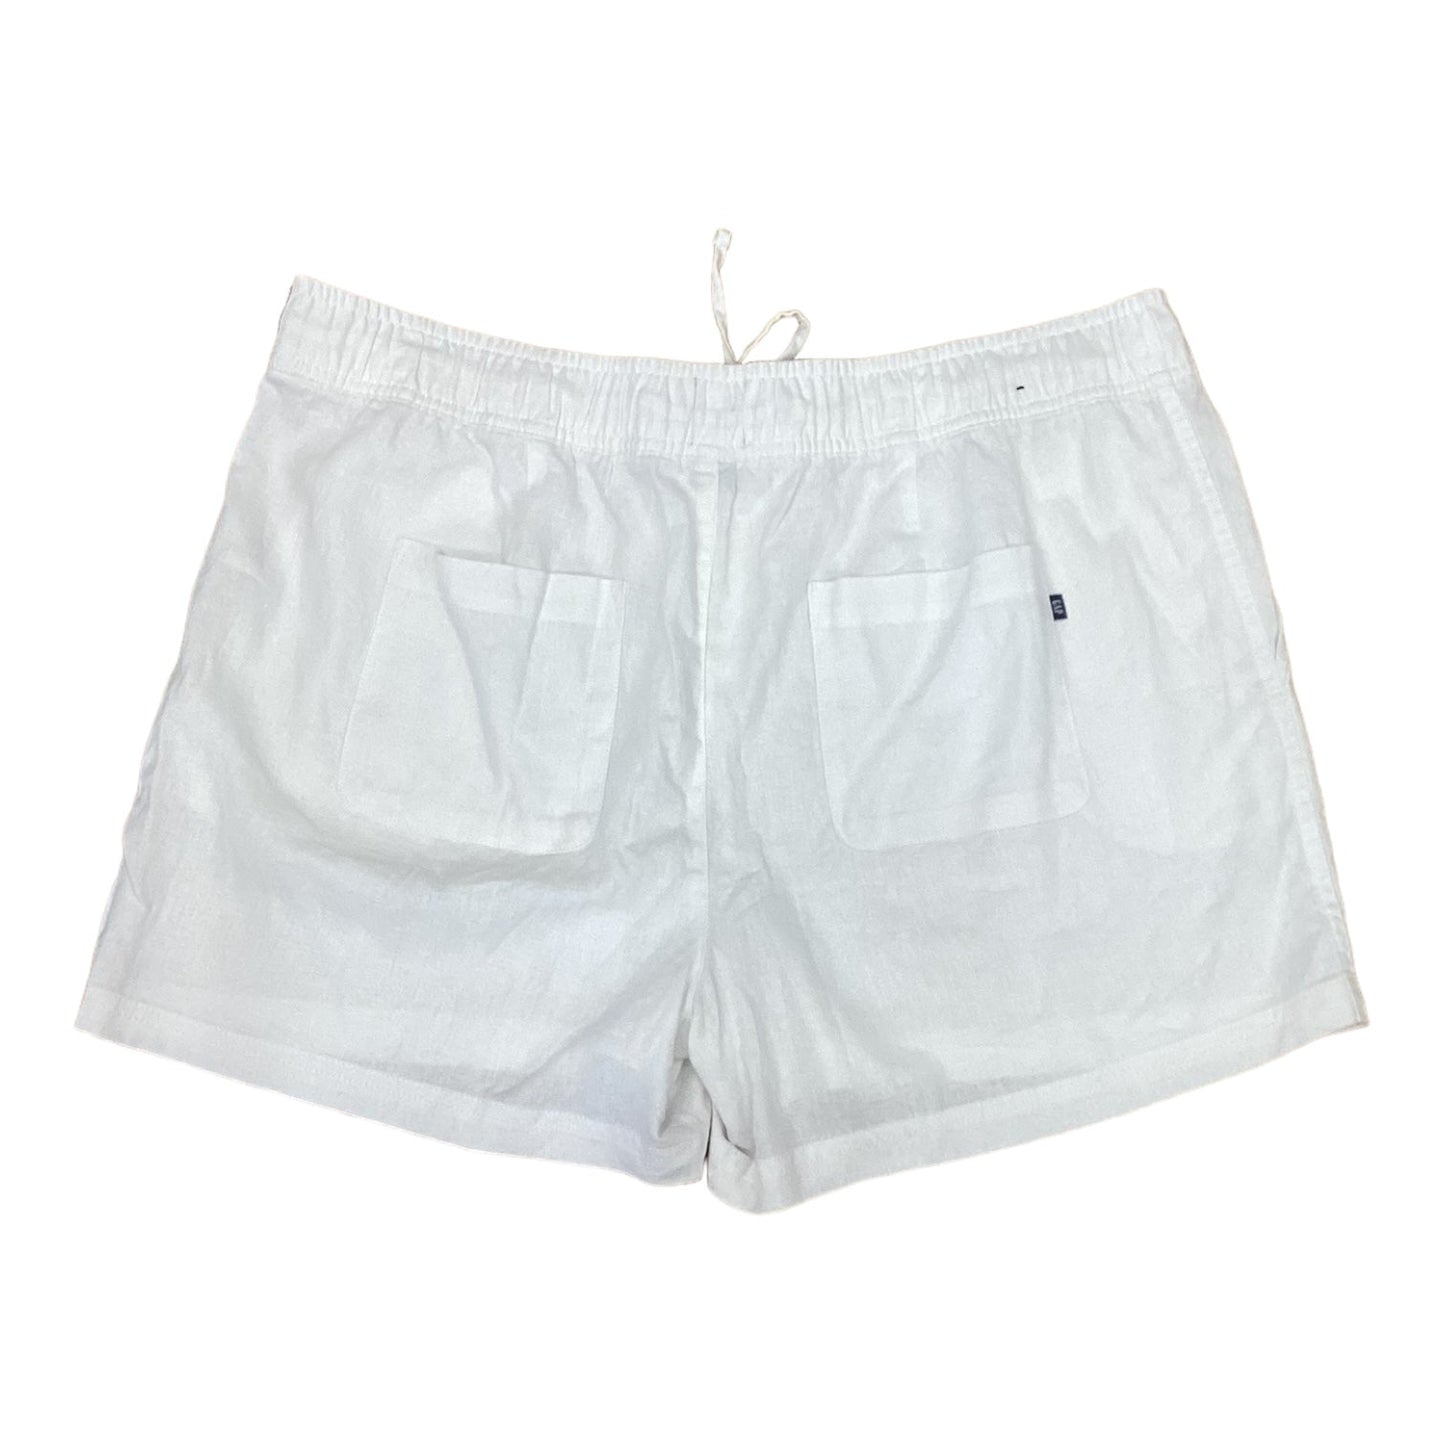 White Shorts Gap, Size Xl